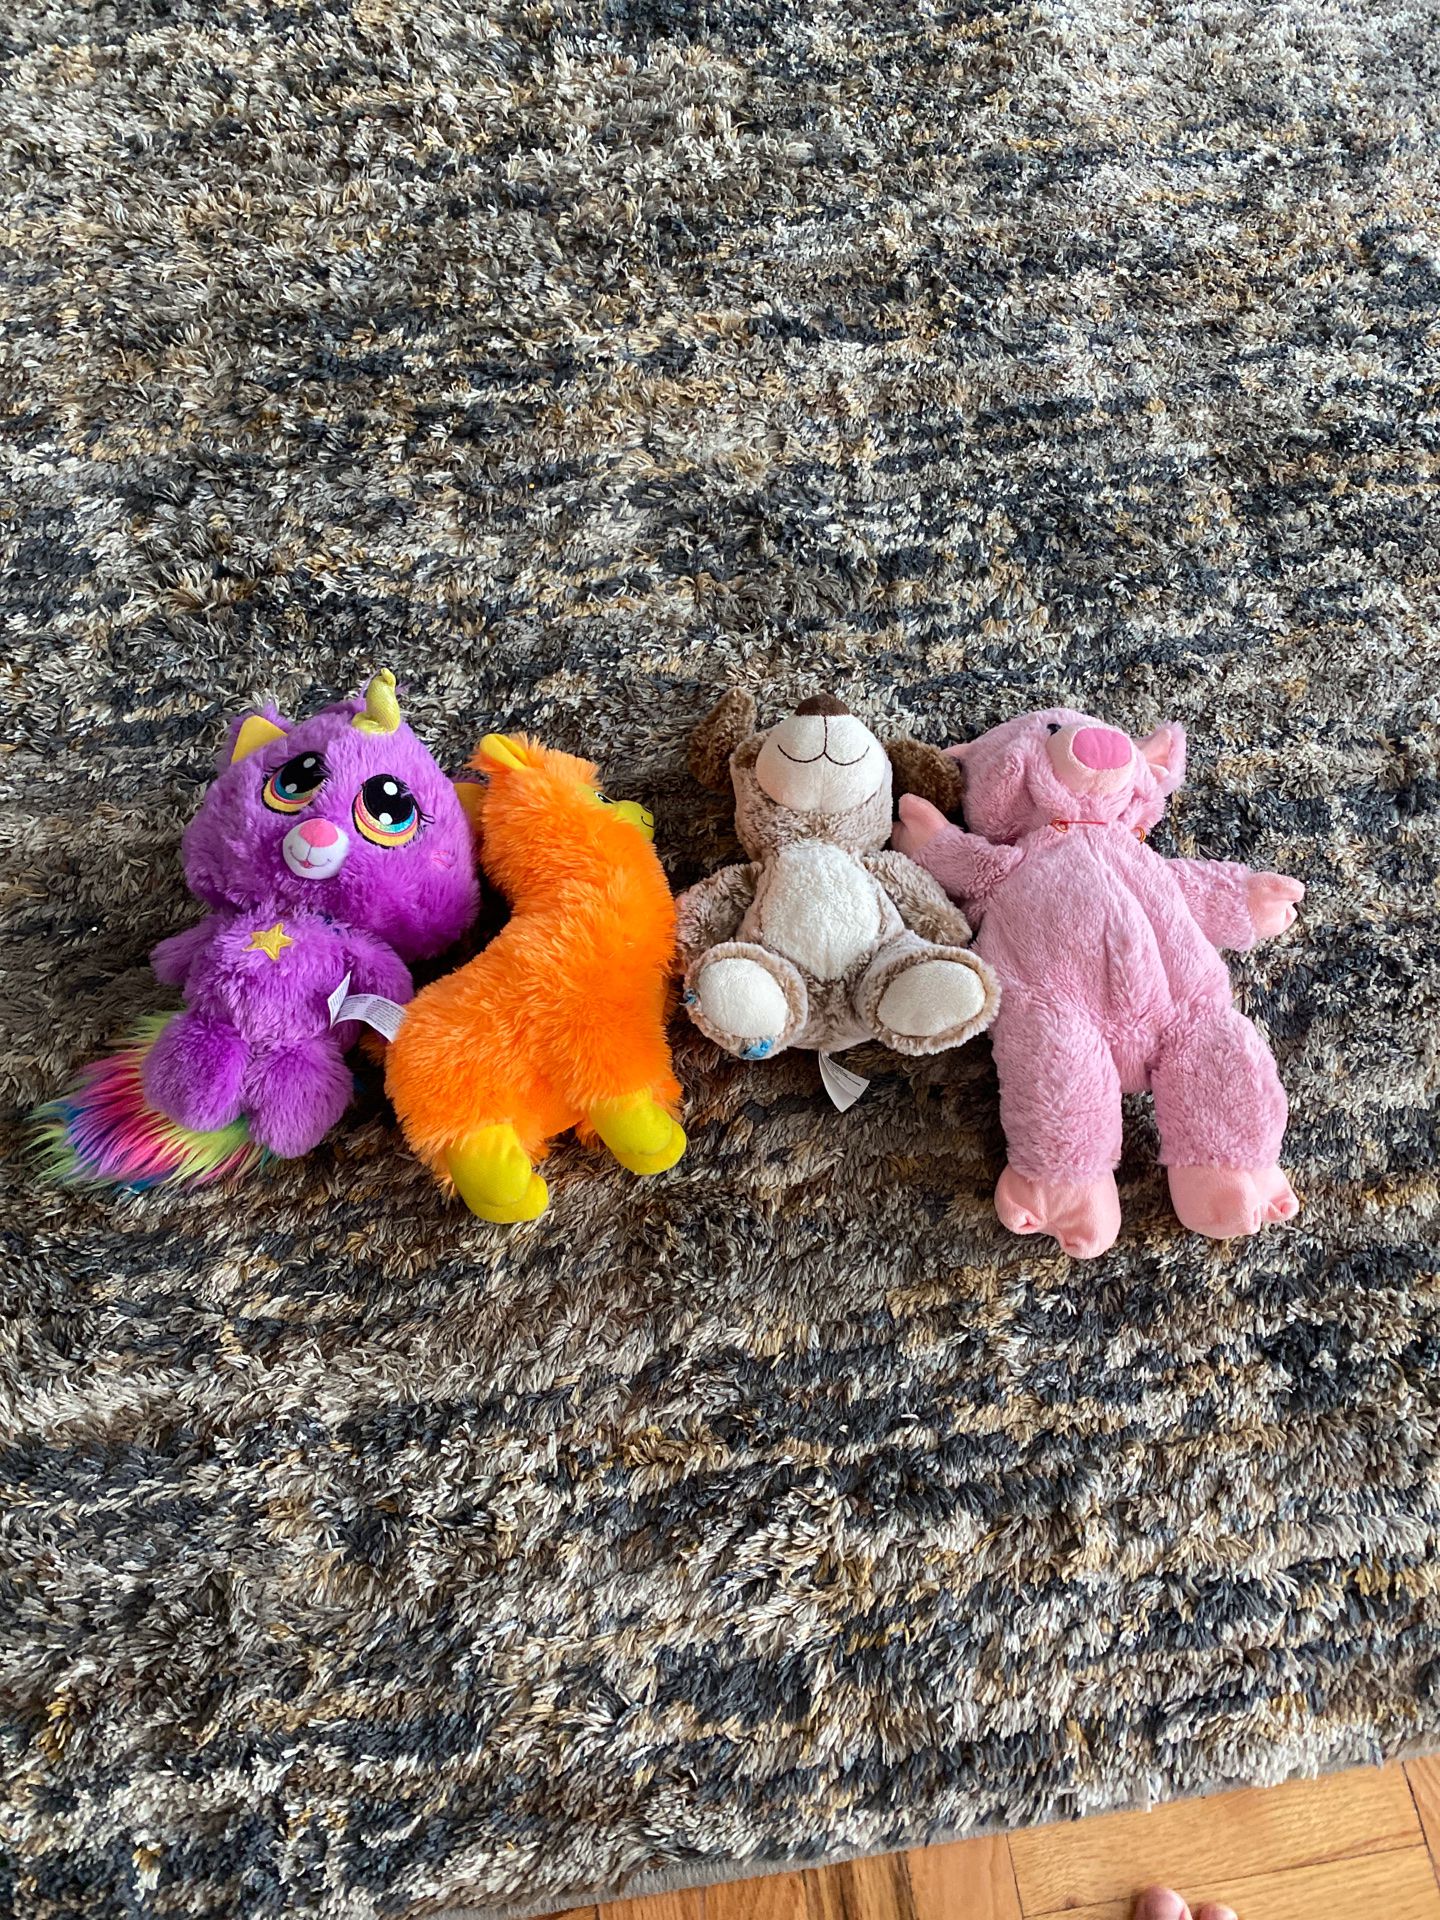 4 Stuffed animals